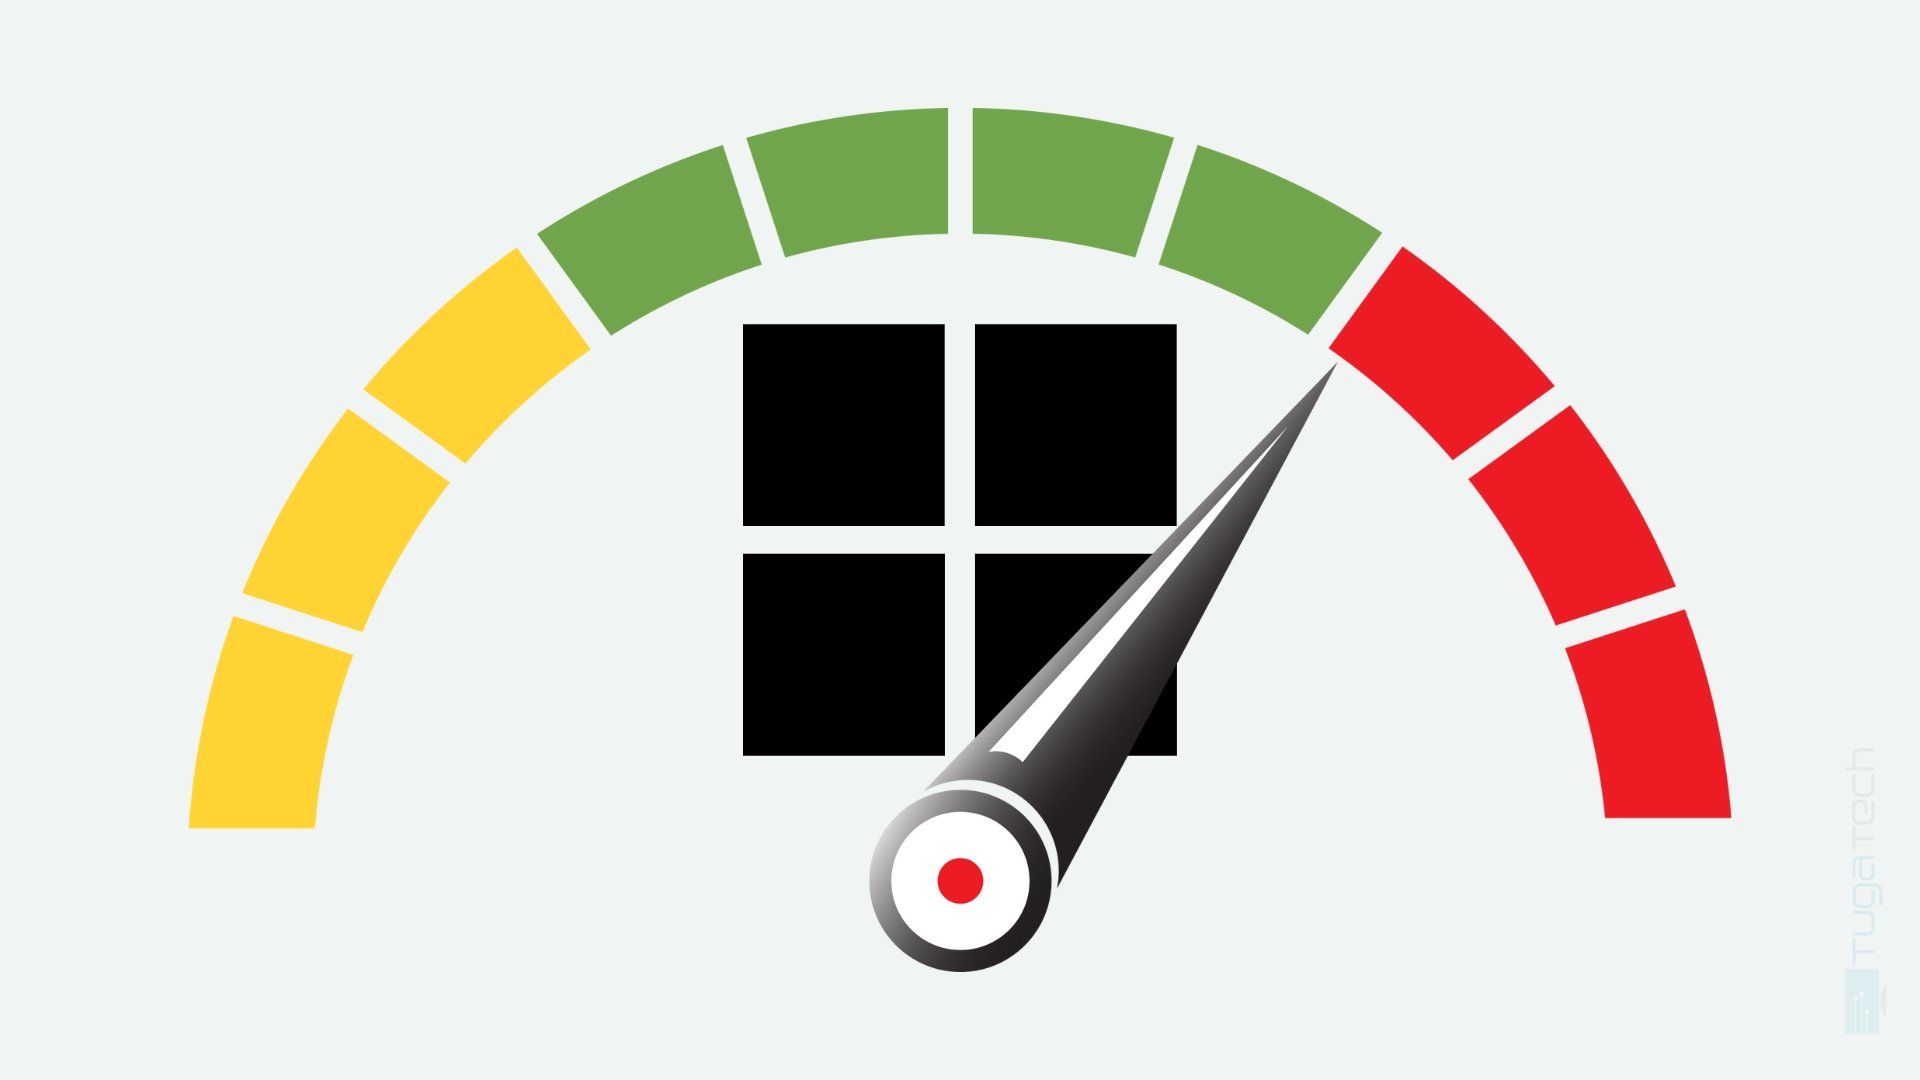 Windows logo with speed limiter